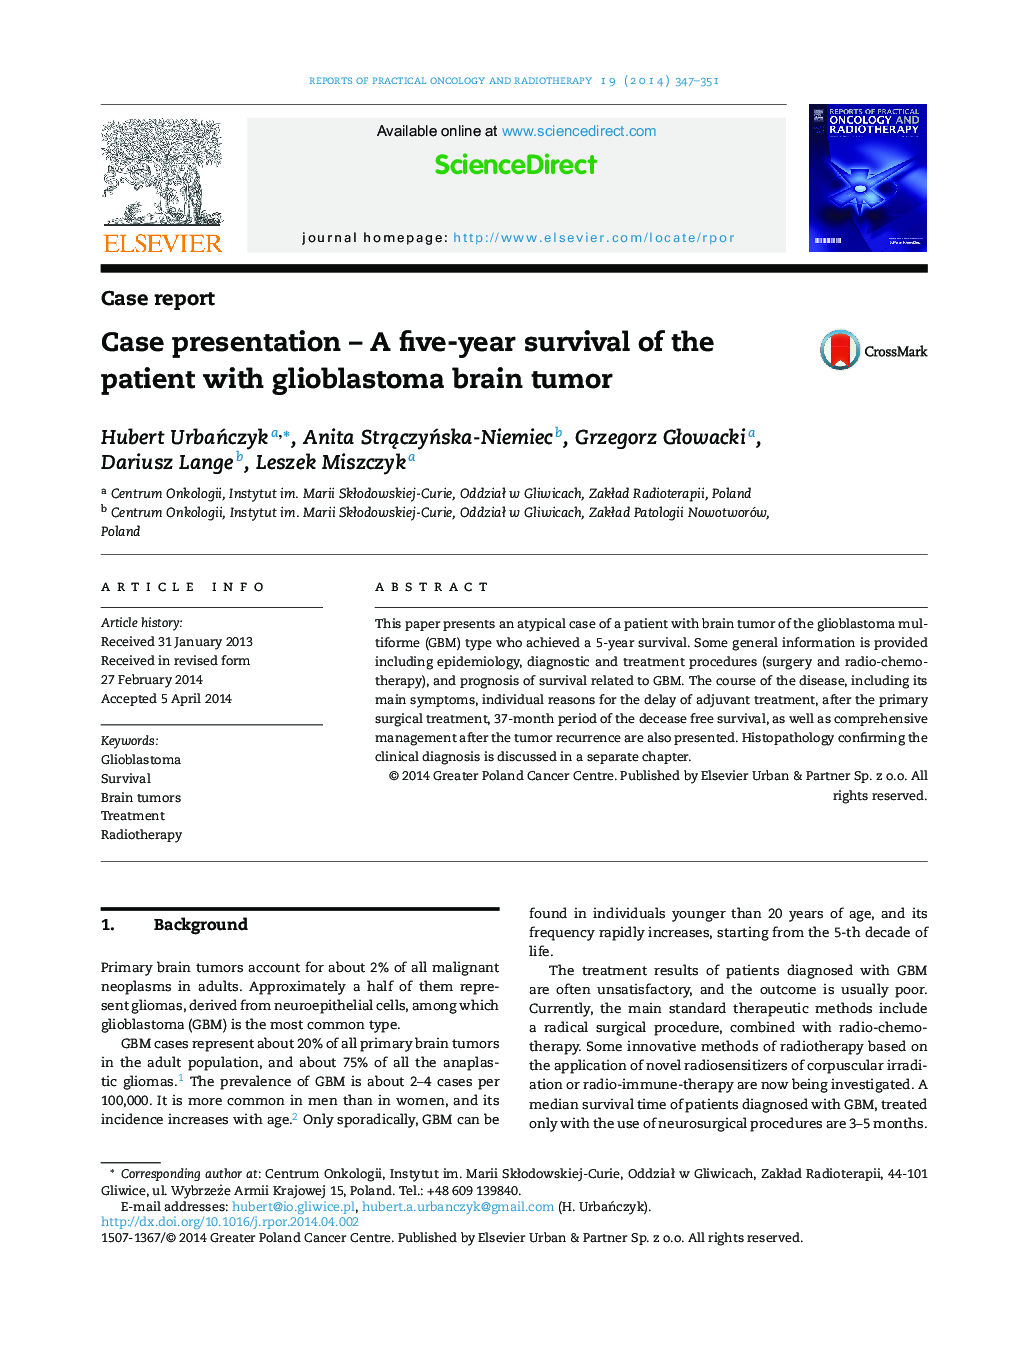 Case presentation - A five-year survival of the patient with glioblastoma brain tumor